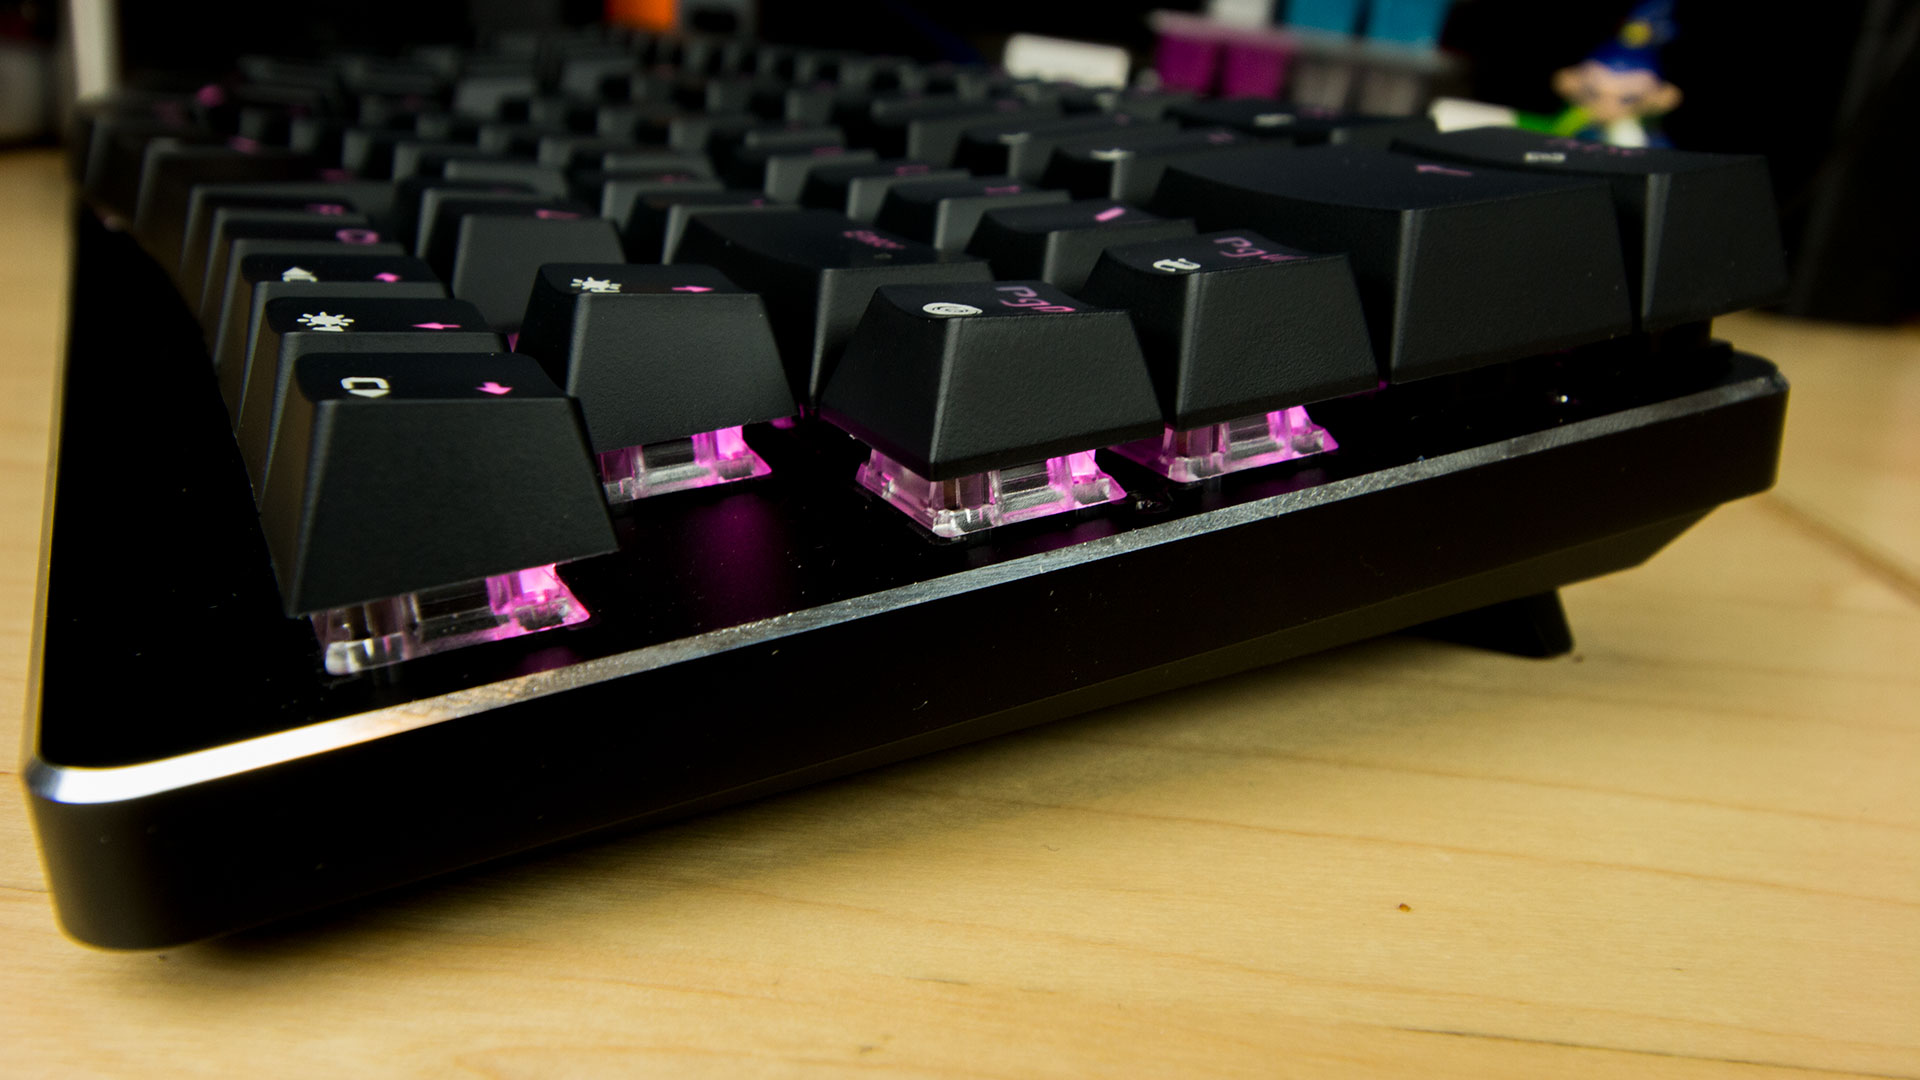 X-Bows Ergonomic Keyboard Review: Strange Shape, Great Typing